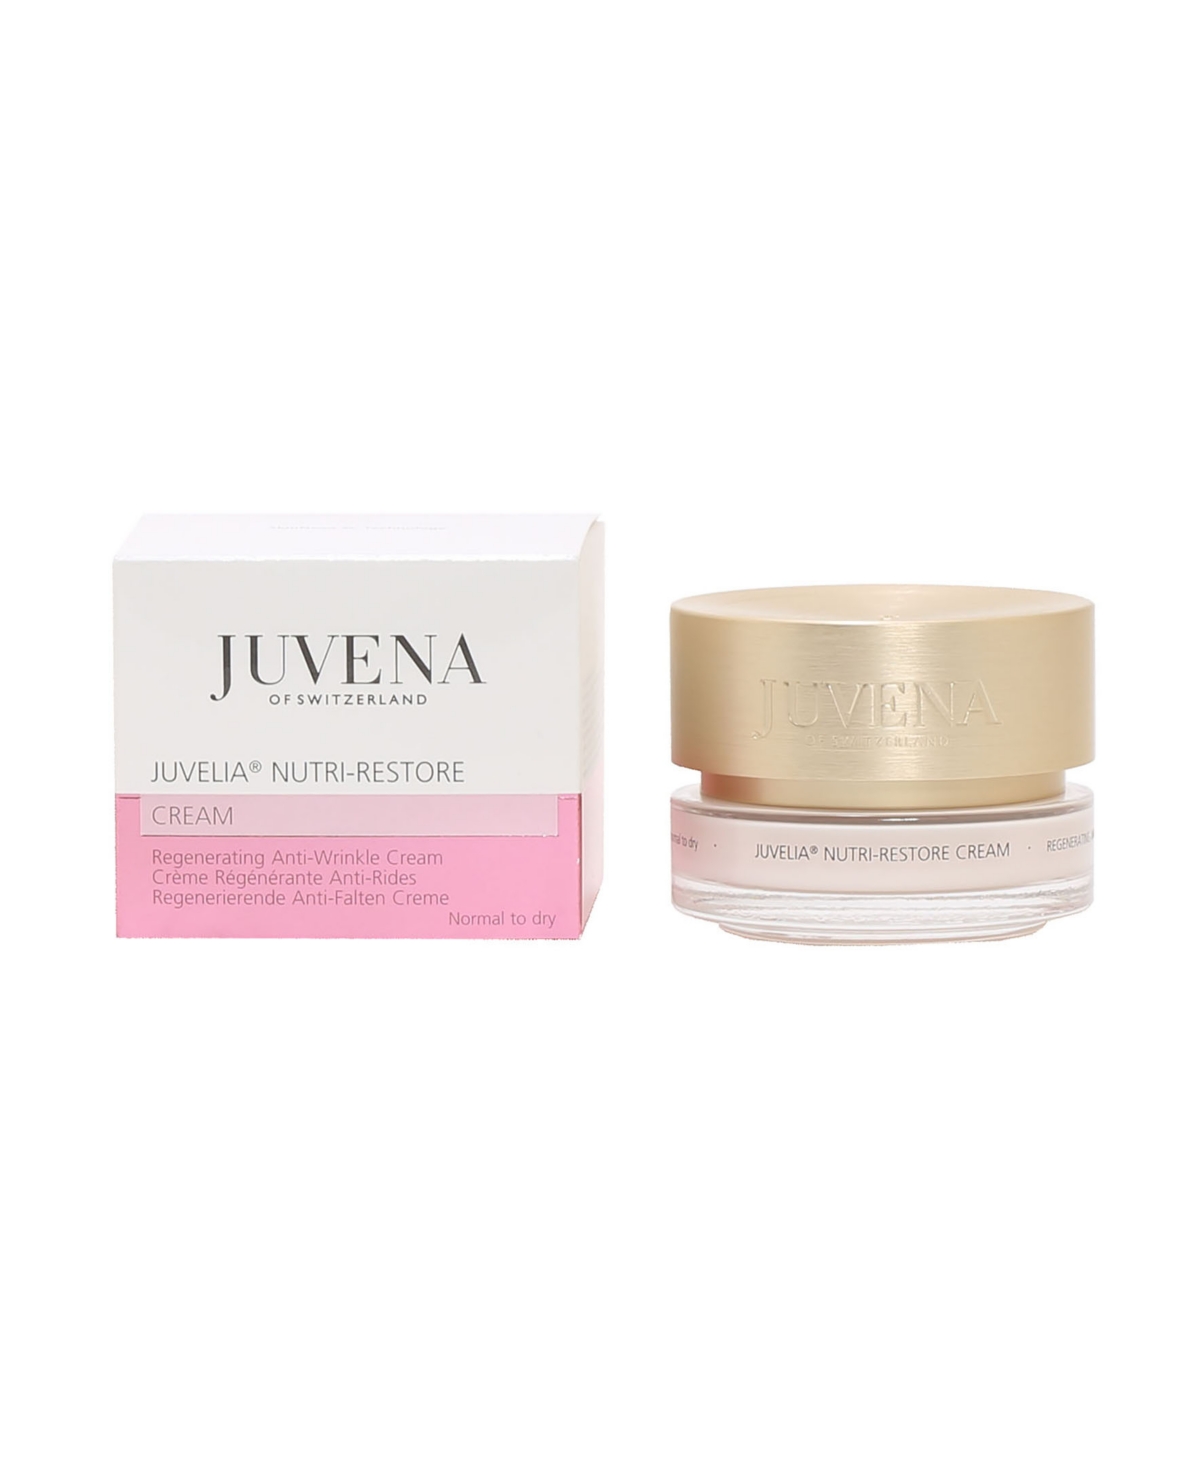 Juvena Skin Energy Nutri-Restore Cream Jar, 1.7 oz